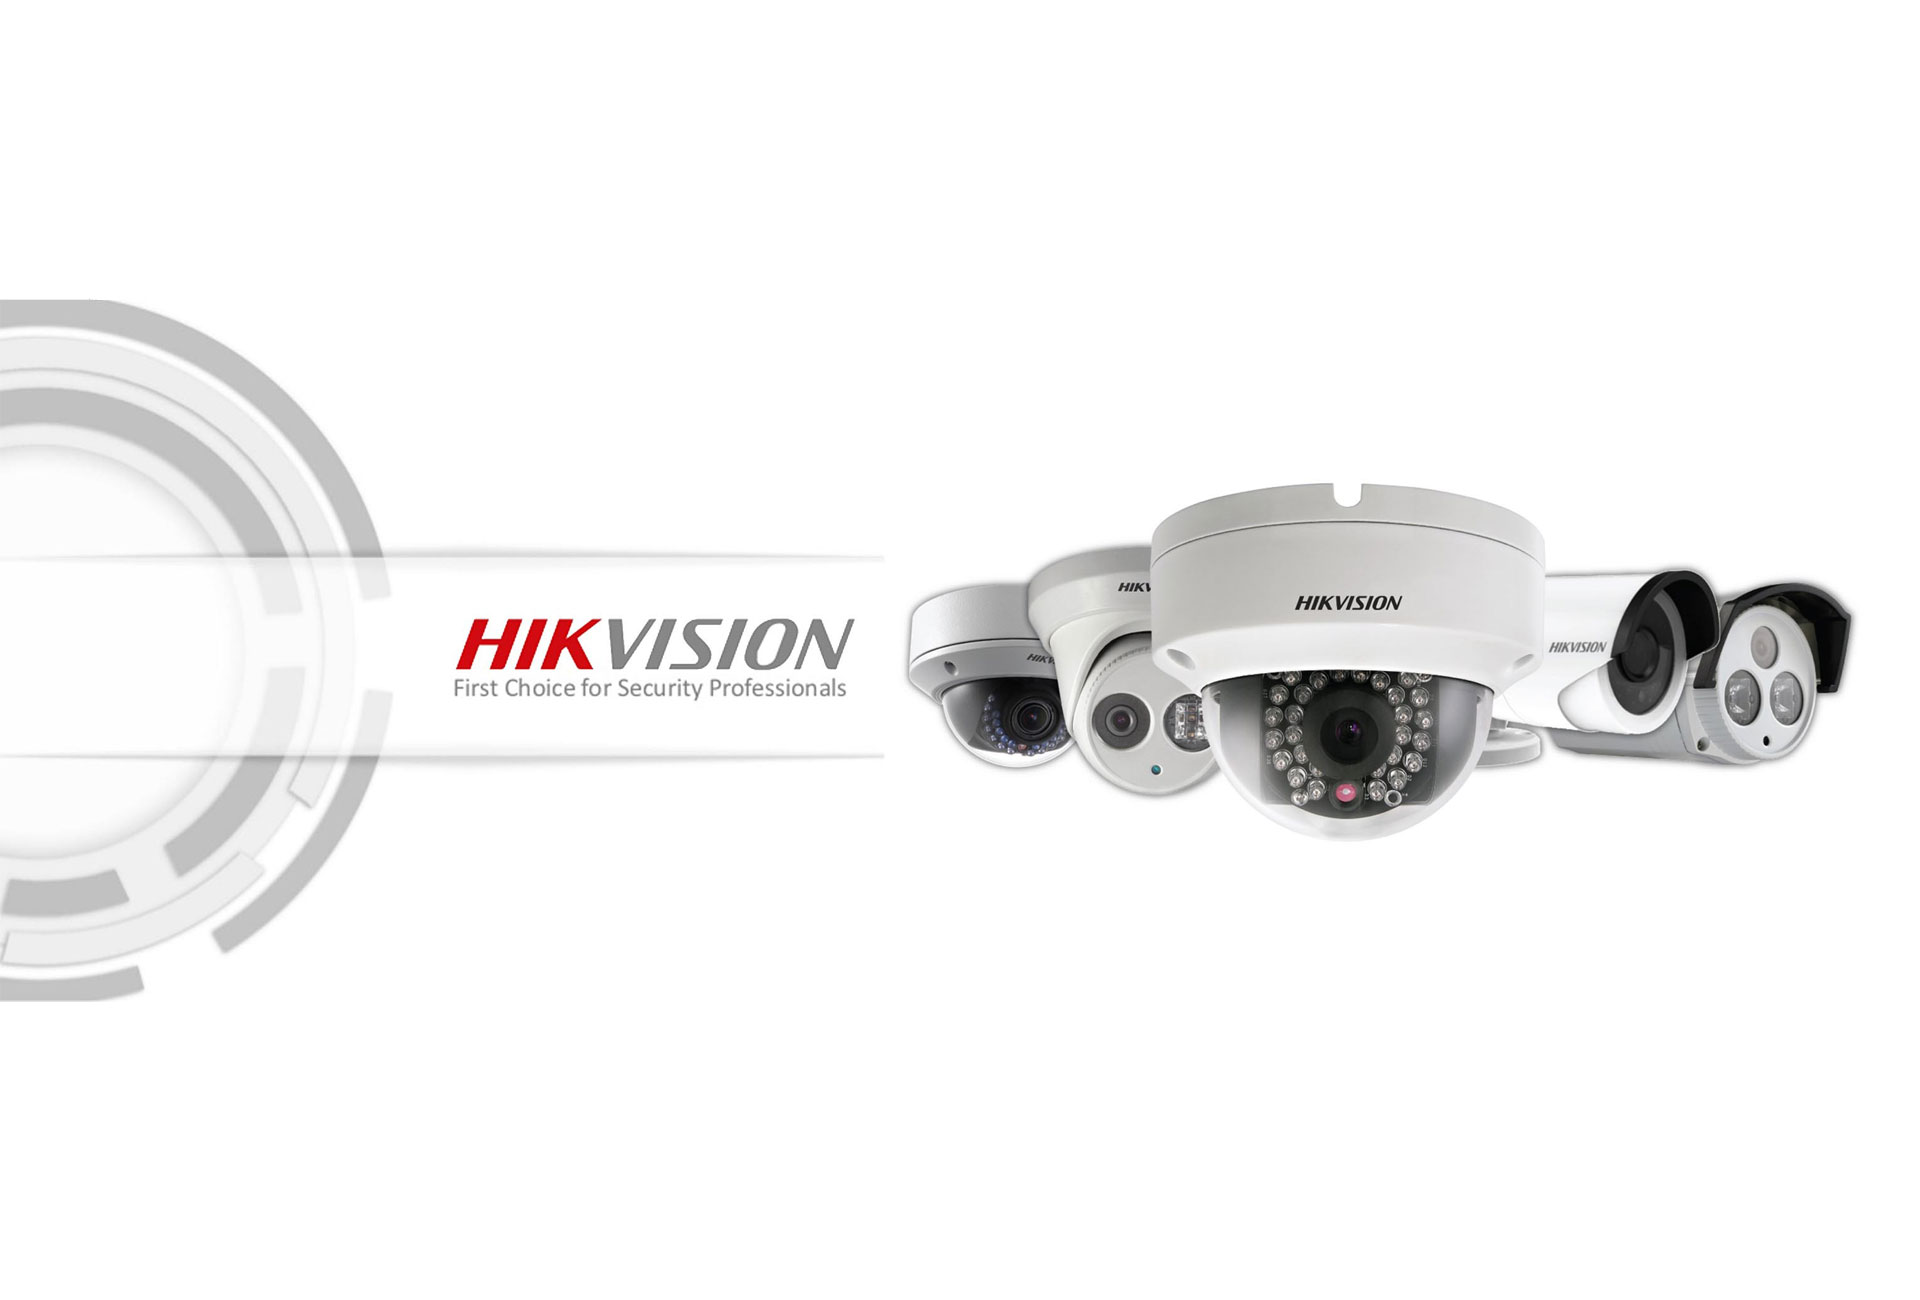 hikvision ip camera company in delhi and gurgaon